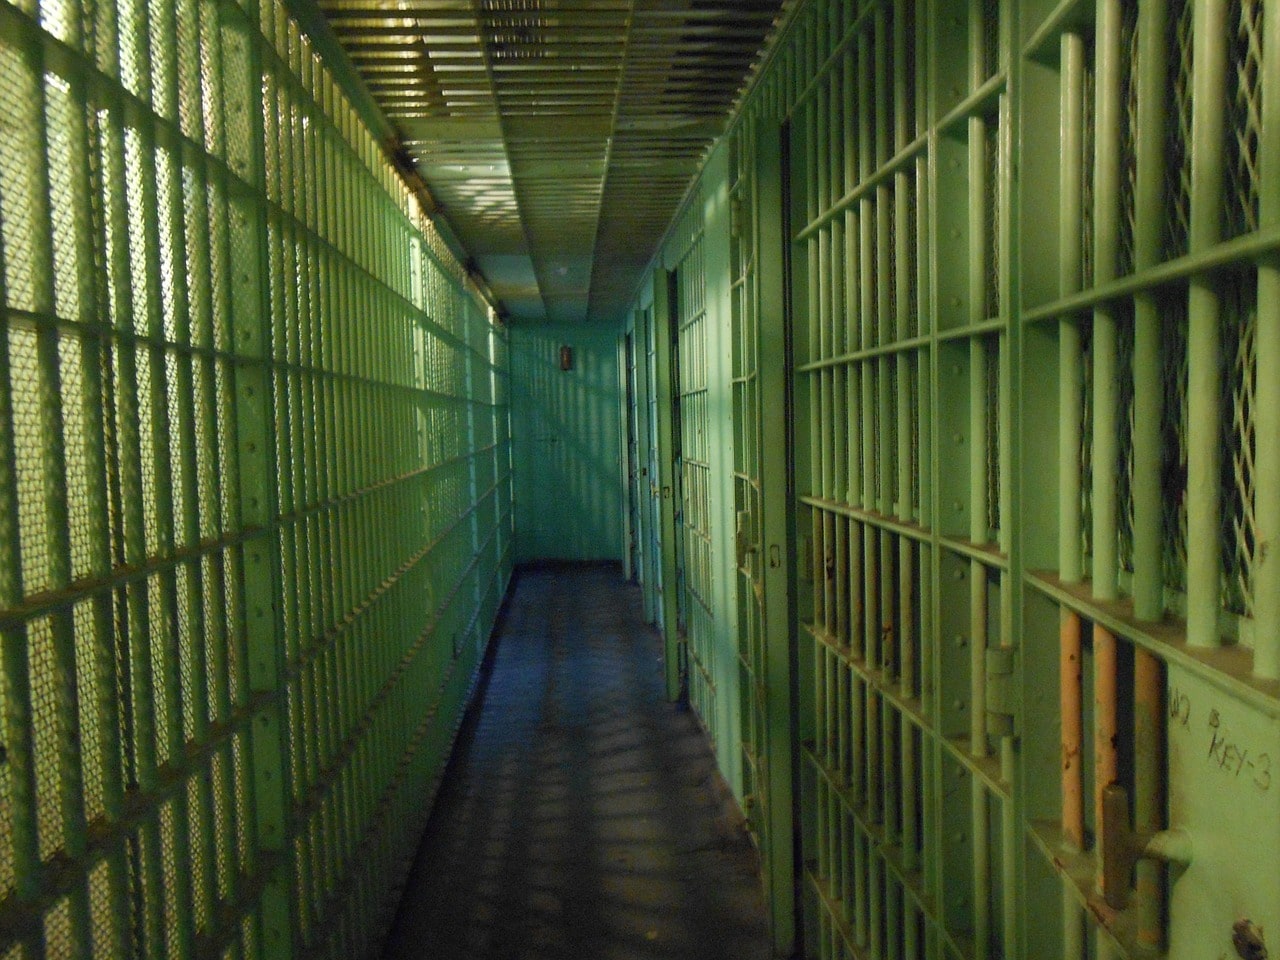 Blockchain fraud: An image showing a dark hallway of jail cells